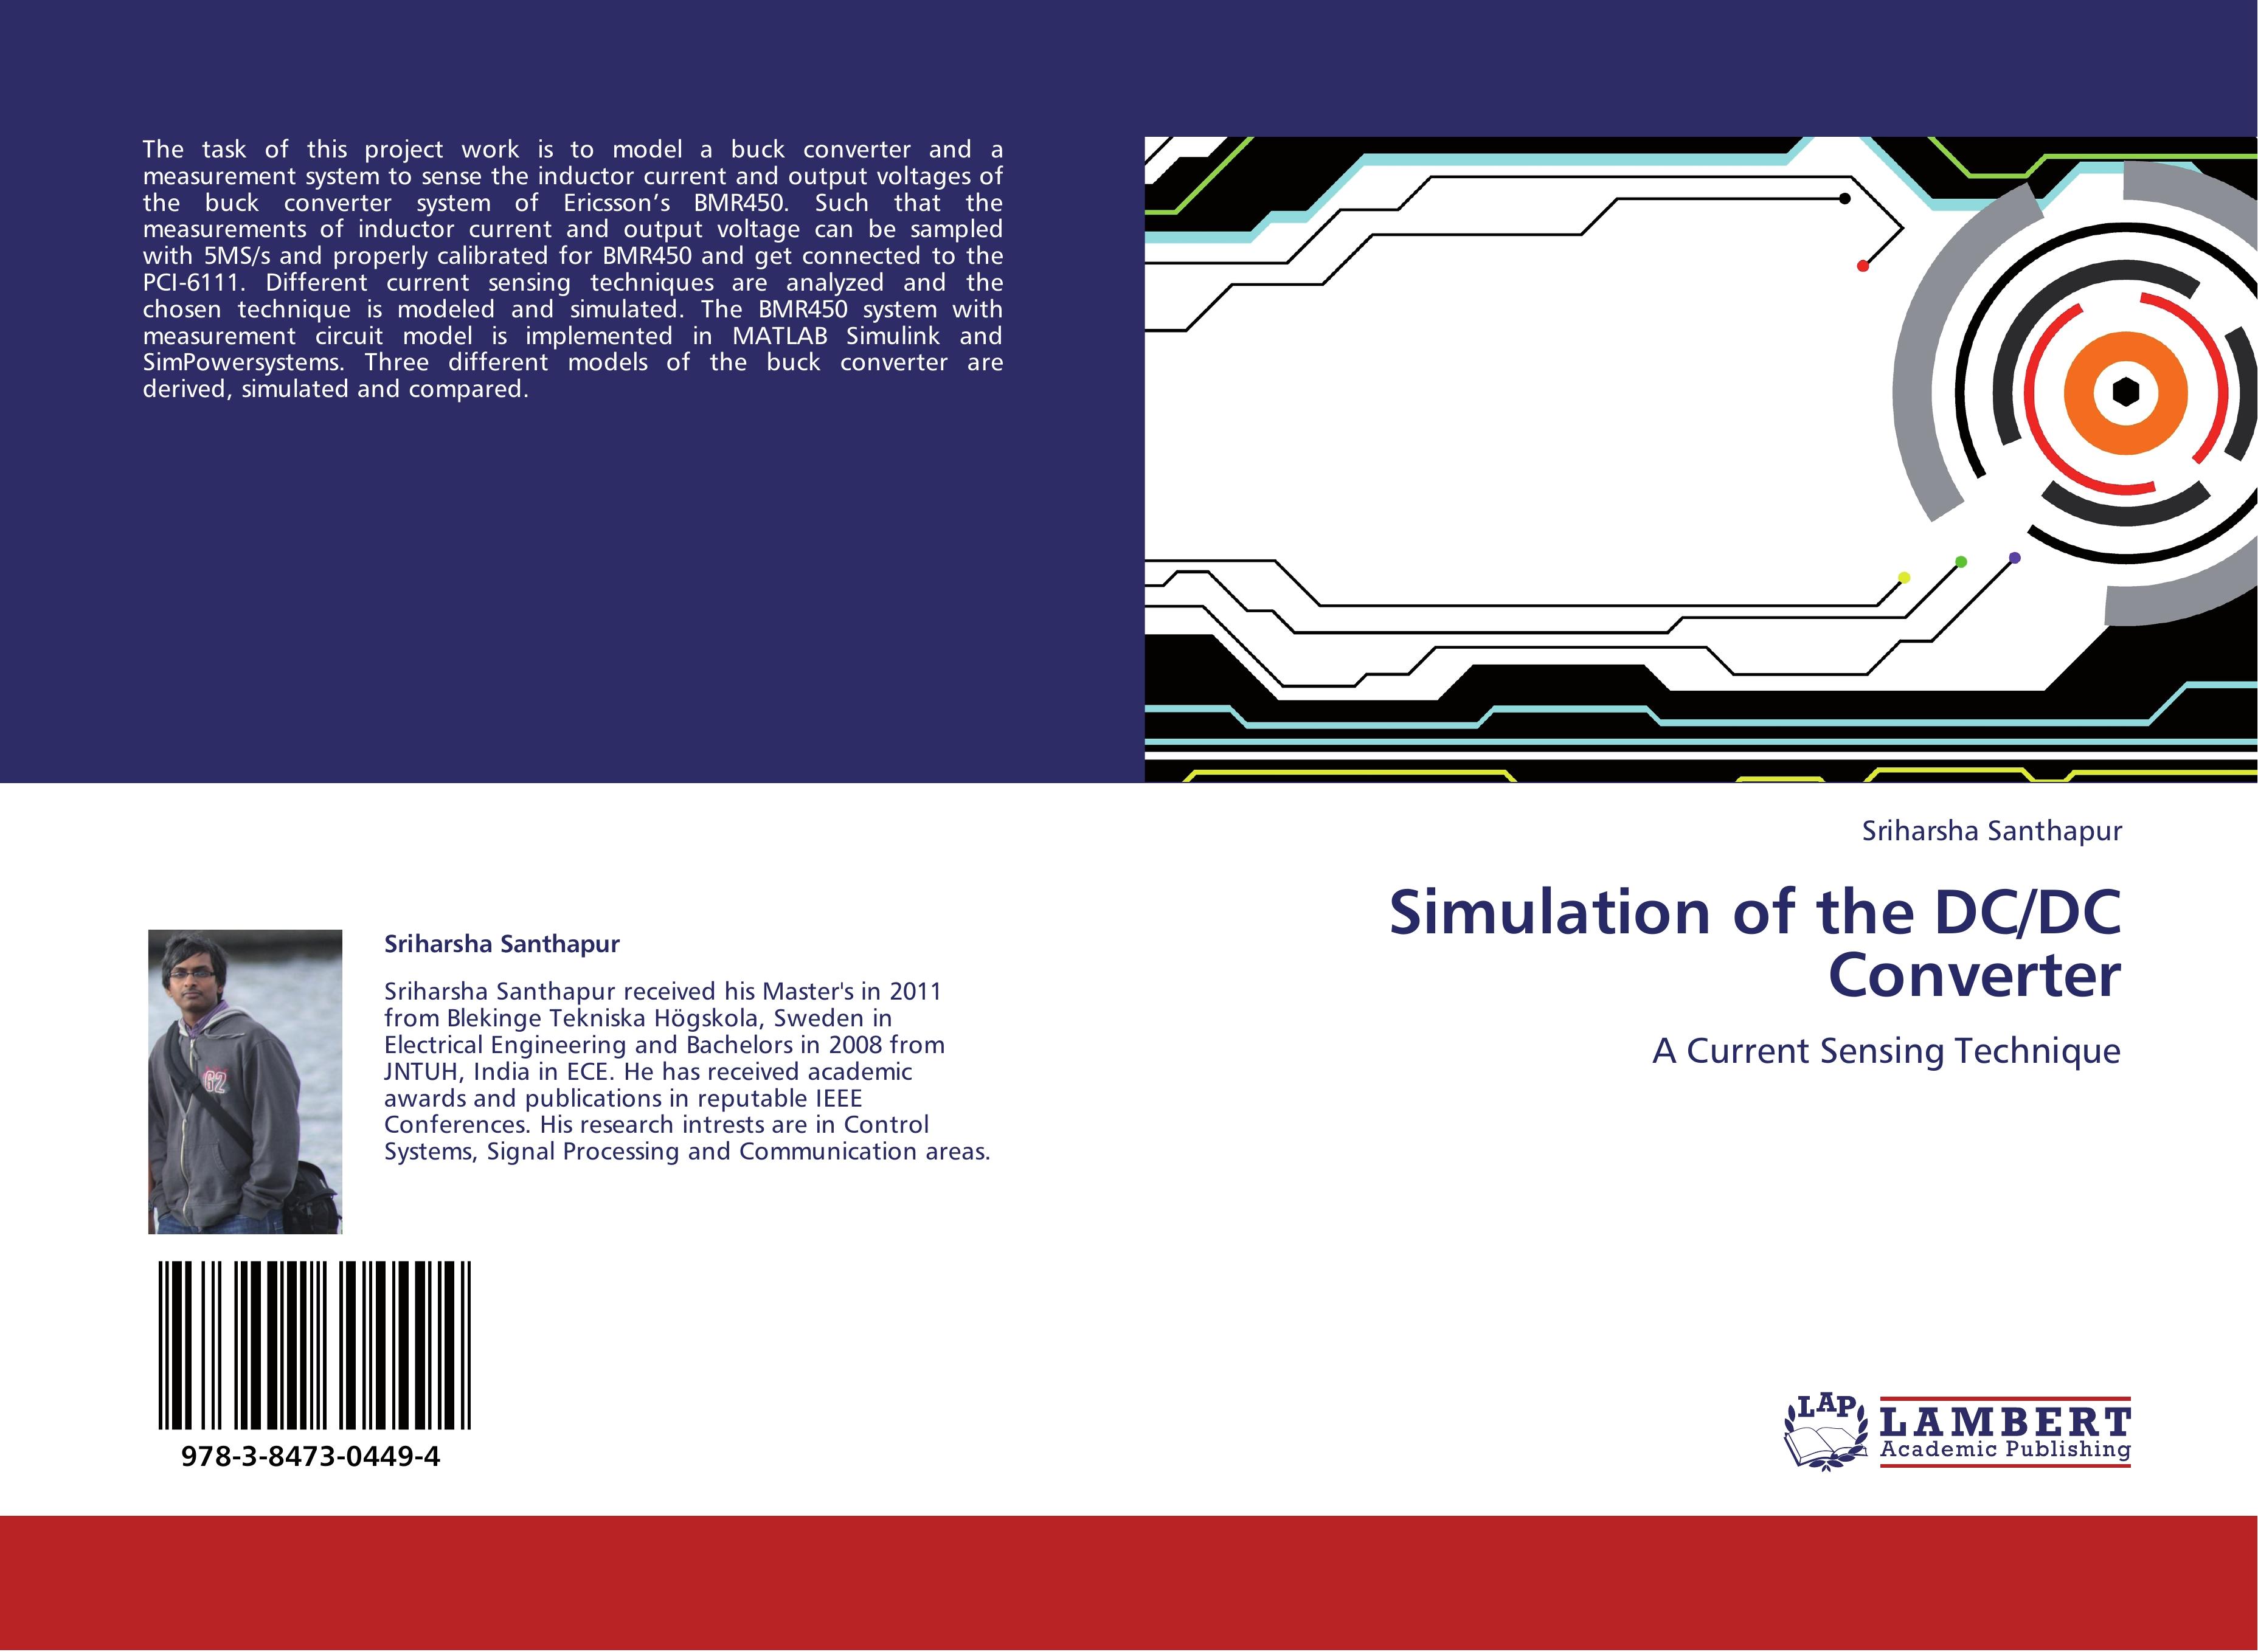 Simulation of the DC/DC Converter / A Current Sensing Technique / Sriharsha Santhapur / Taschenbuch / Paperback / 72 S. / Englisch / 2011 / LAP LAMBERT Academic Publishing / EAN 9783847304494 - Santhapur, Sriharsha